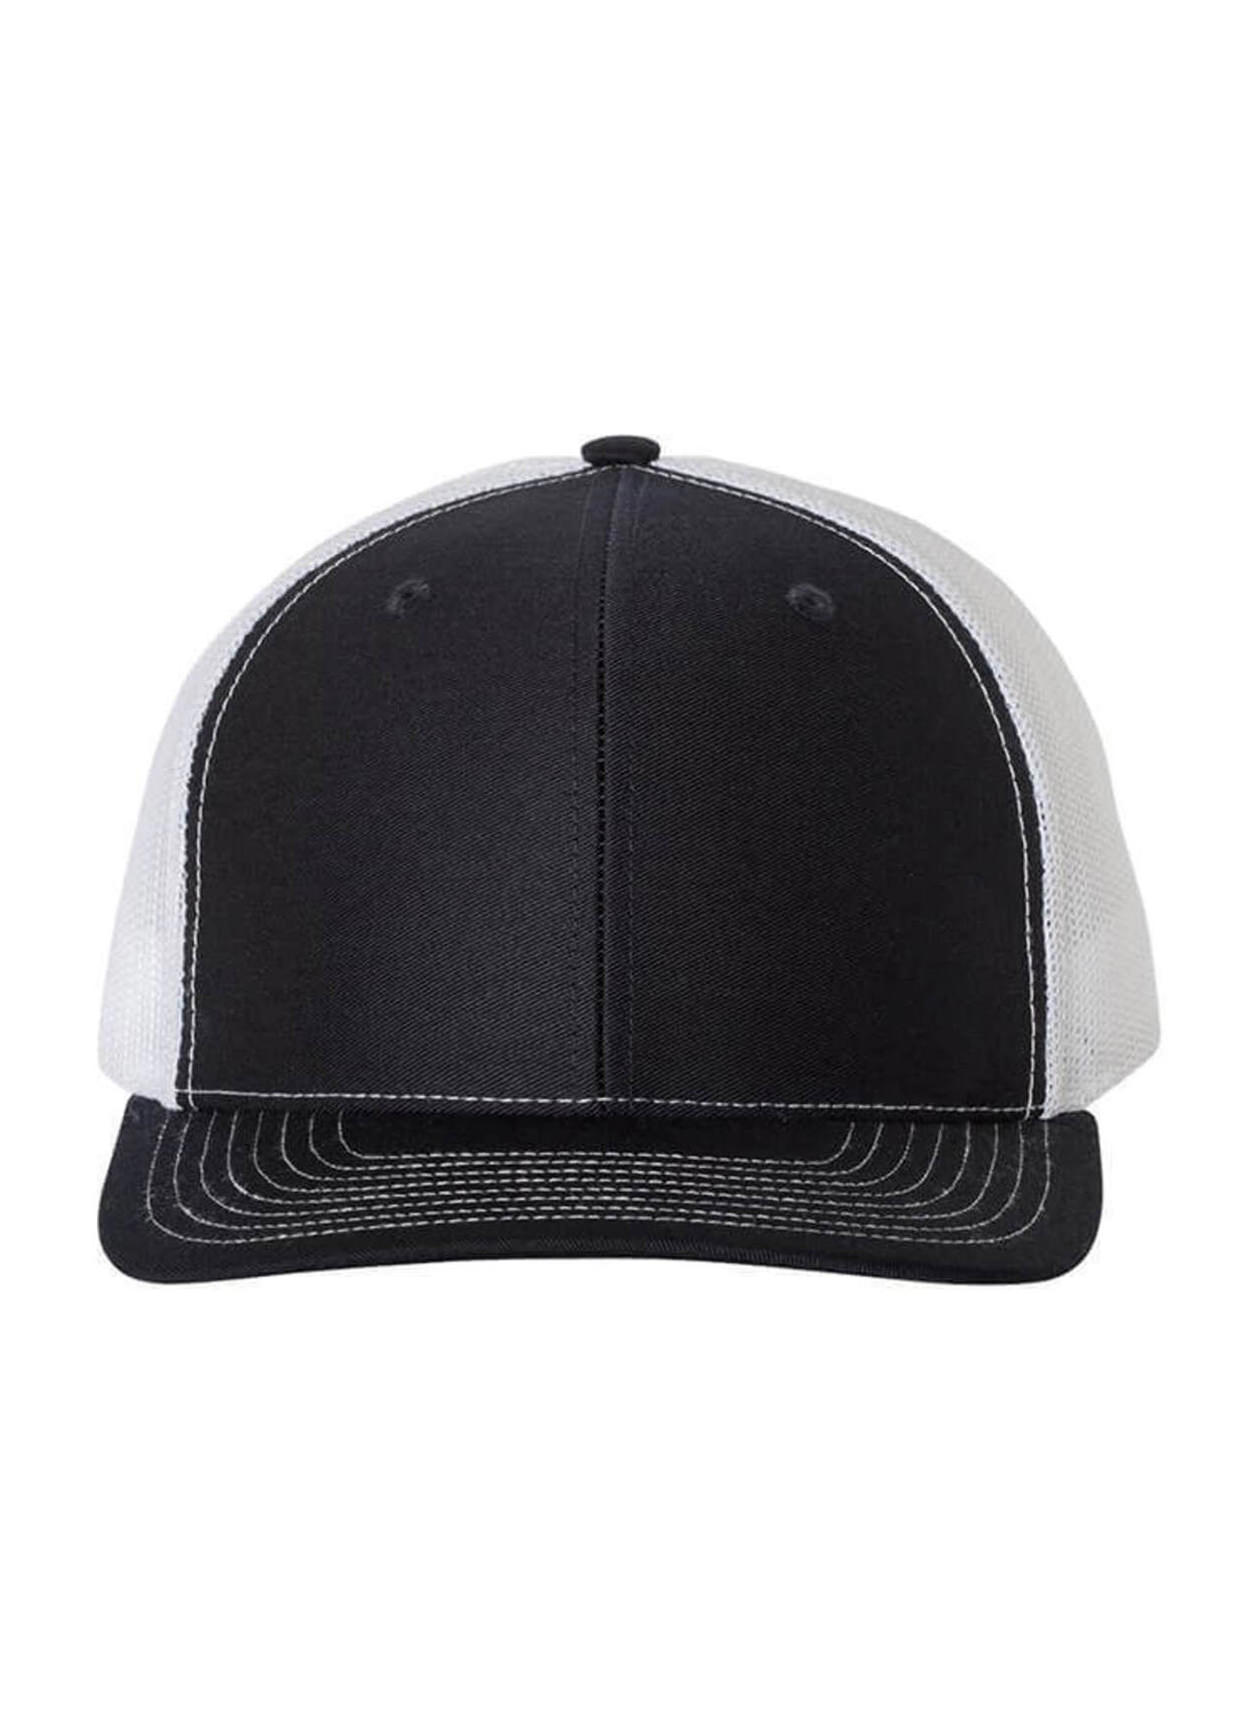 Richardson Navy / White Adjustable Snapback Trucker Hat